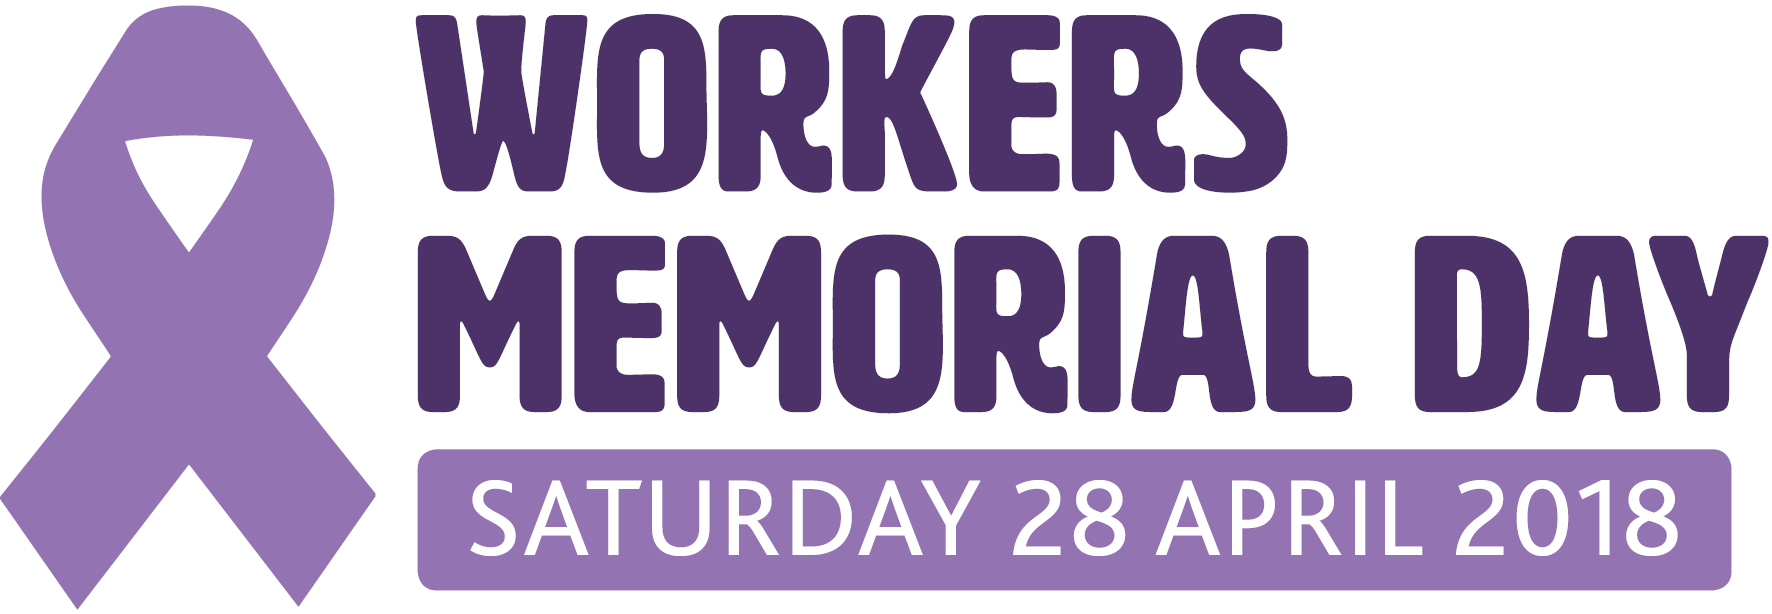 Workers Memorial Day 2018 Logo 